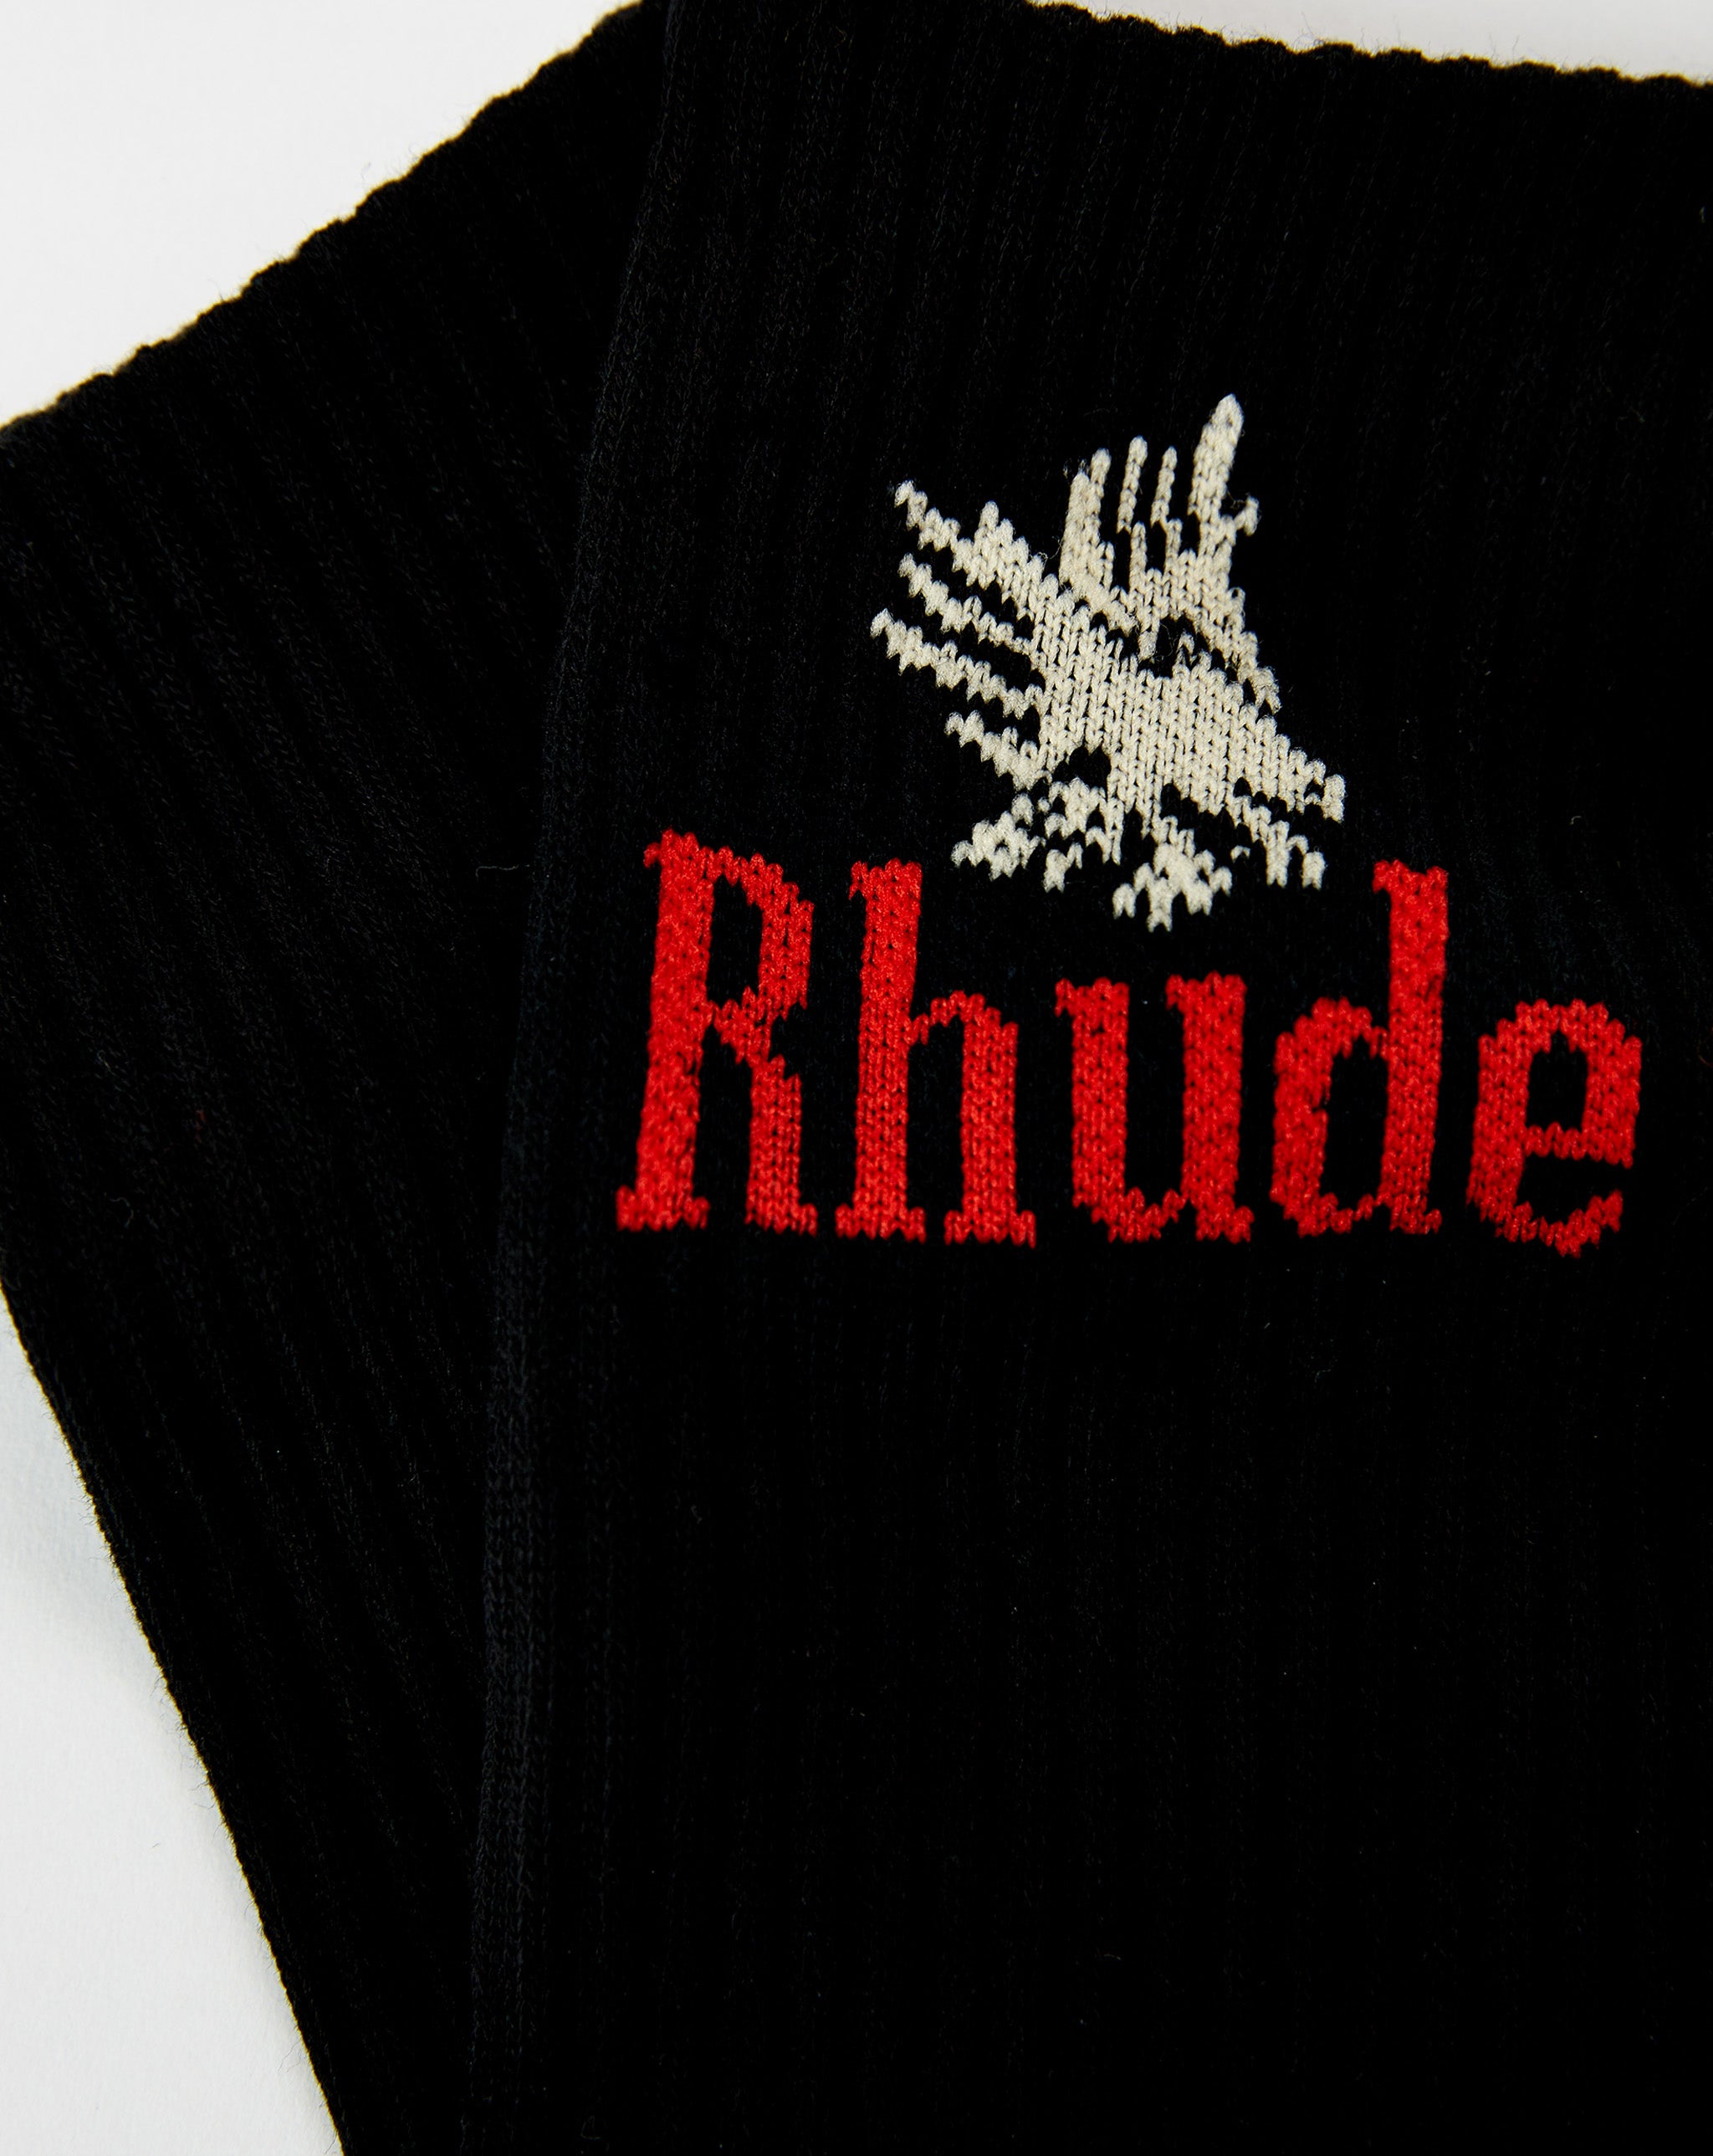 Rhude Eagles Sock  - Cheap Urlfreeze Jordan outlet